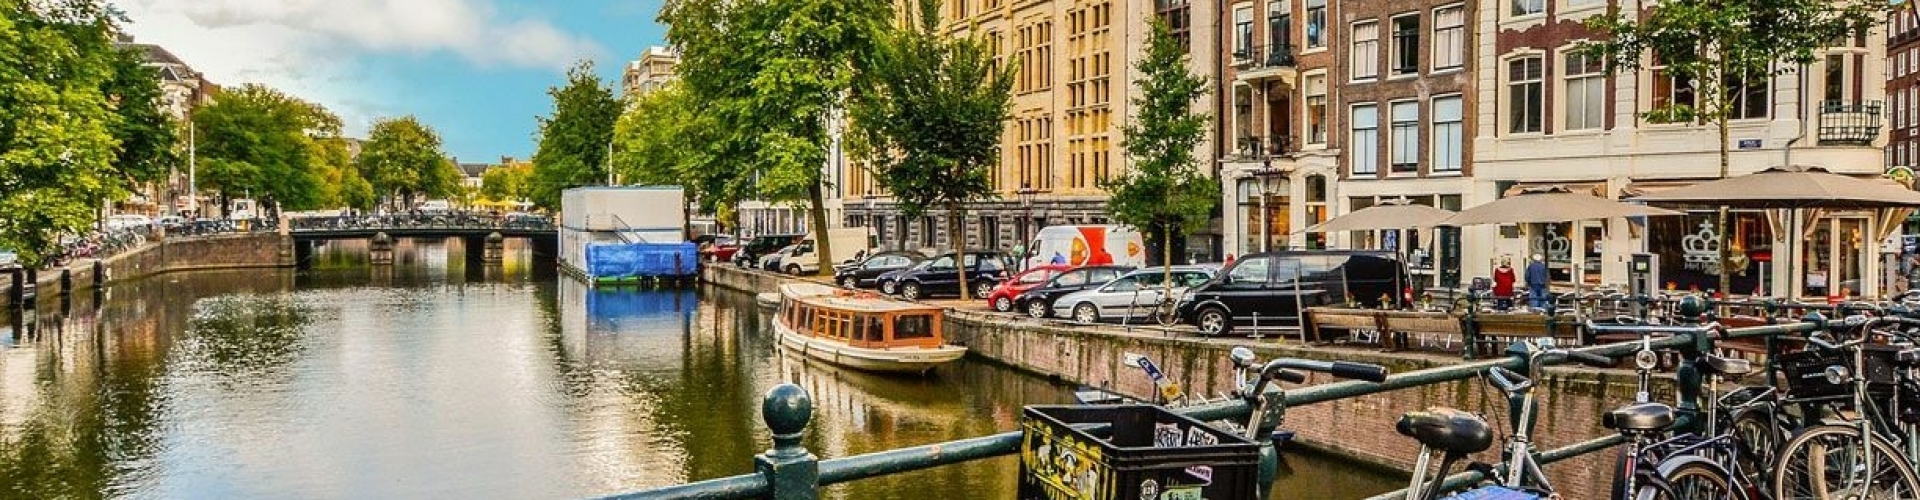 visiter Amsterdam guide touristique